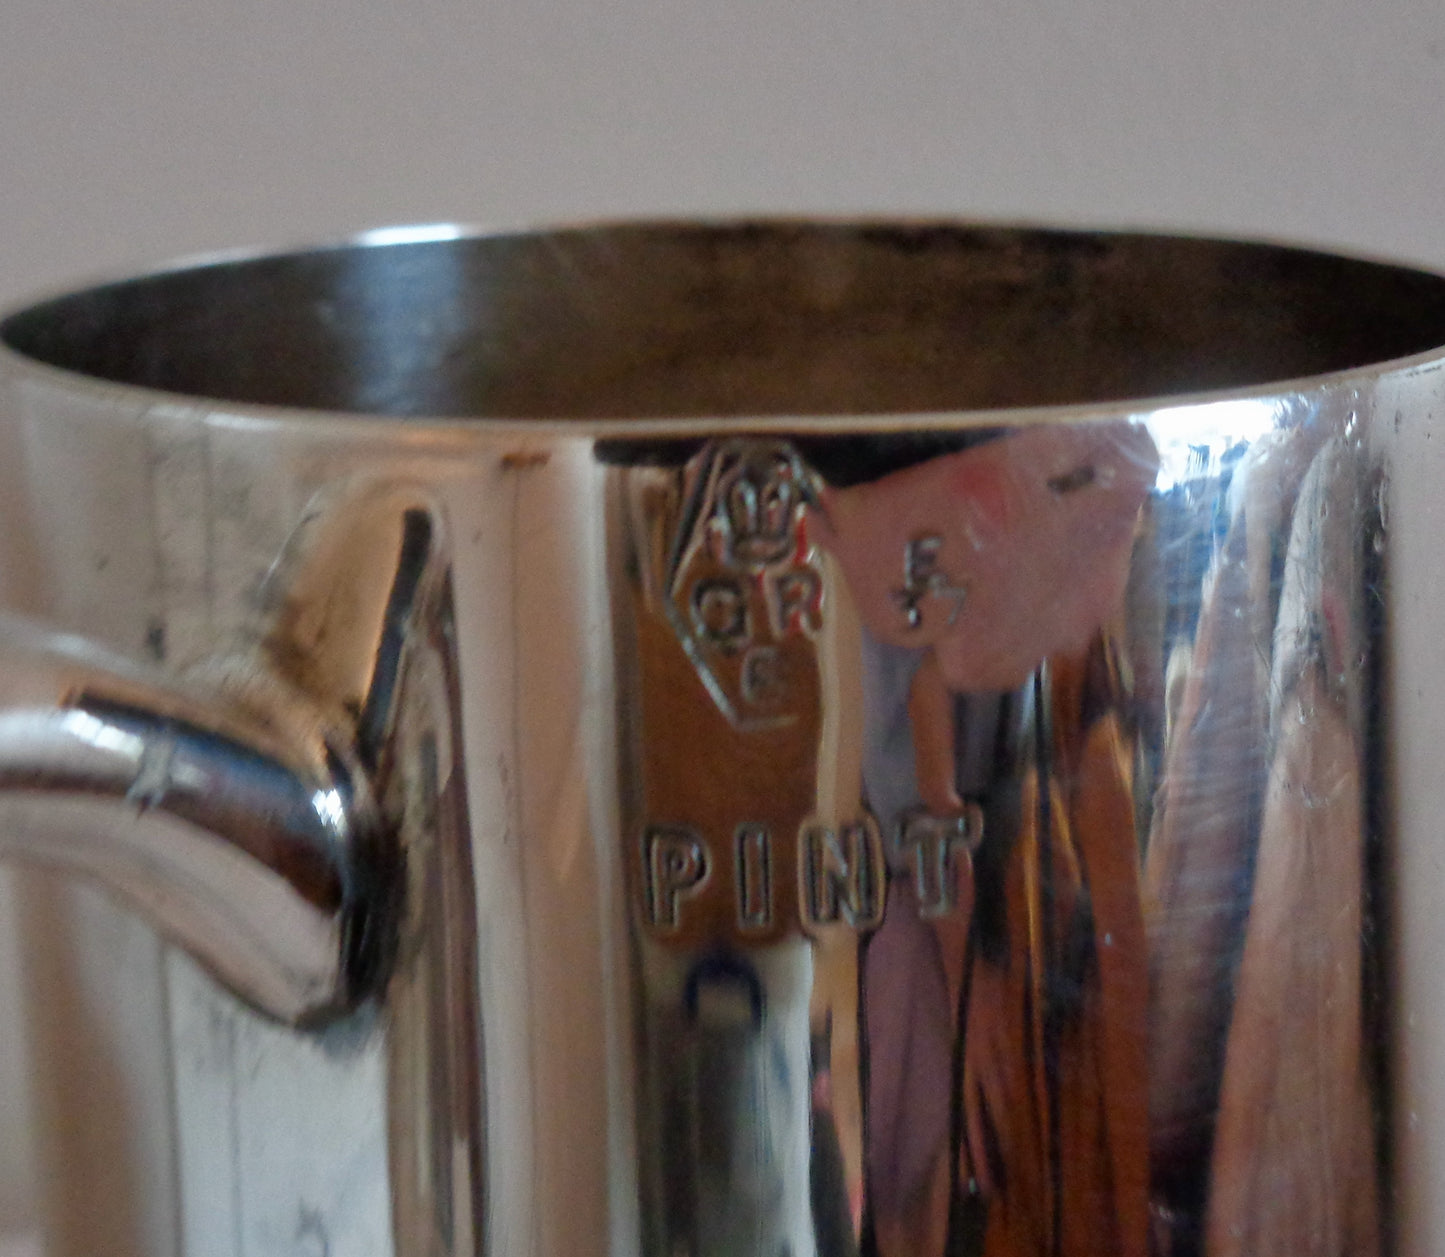 1937 1 Pint Cardinal Plate Silver Tankard Drinks Measure By Goldsmiths